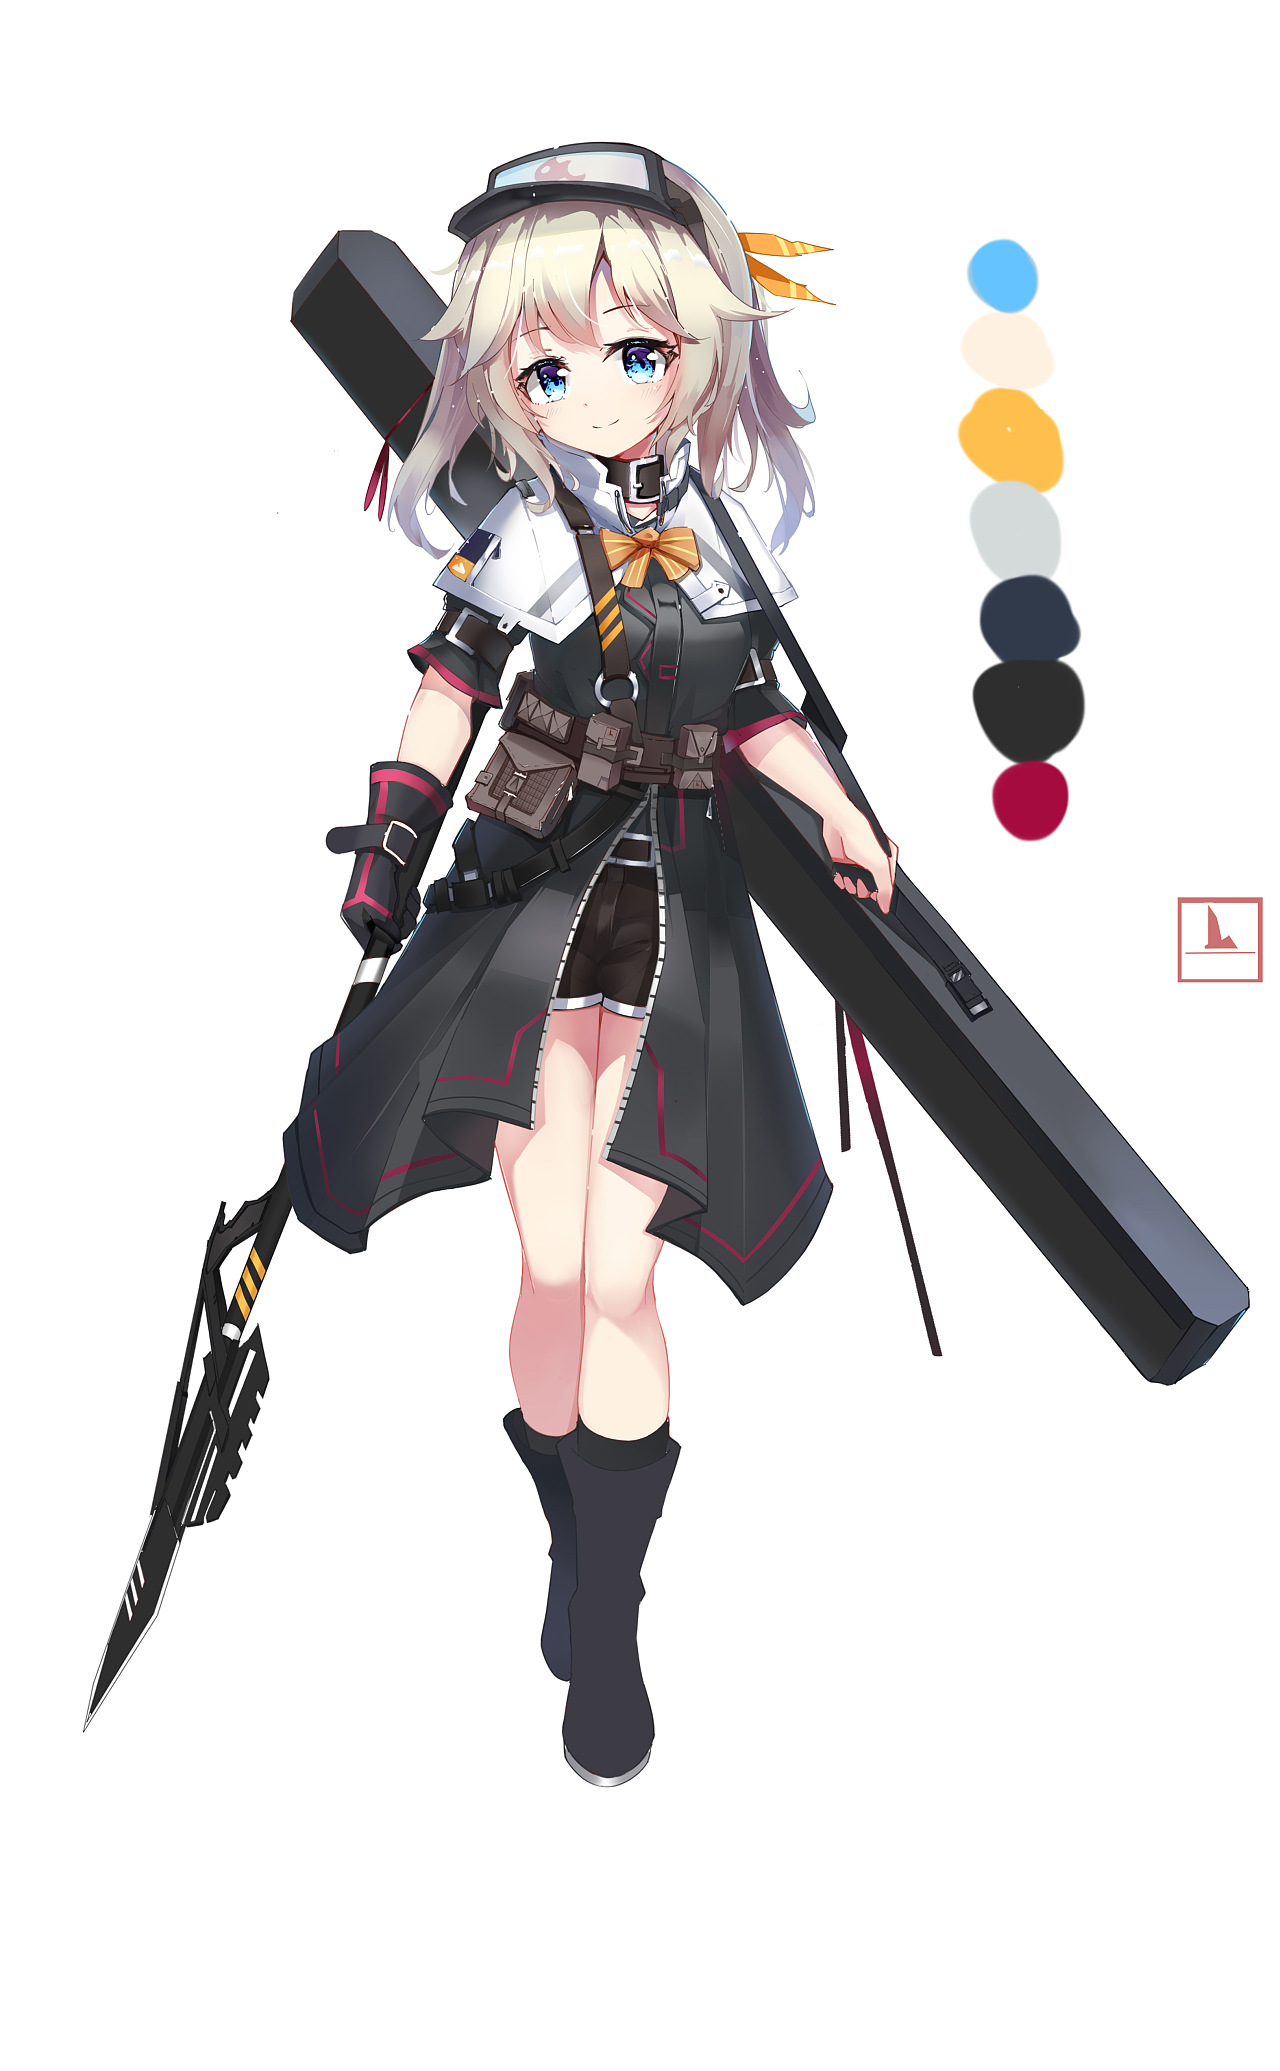 Wallpaper : senjata, cosplay, rambut panjang, rambut putih, gadis anime ...